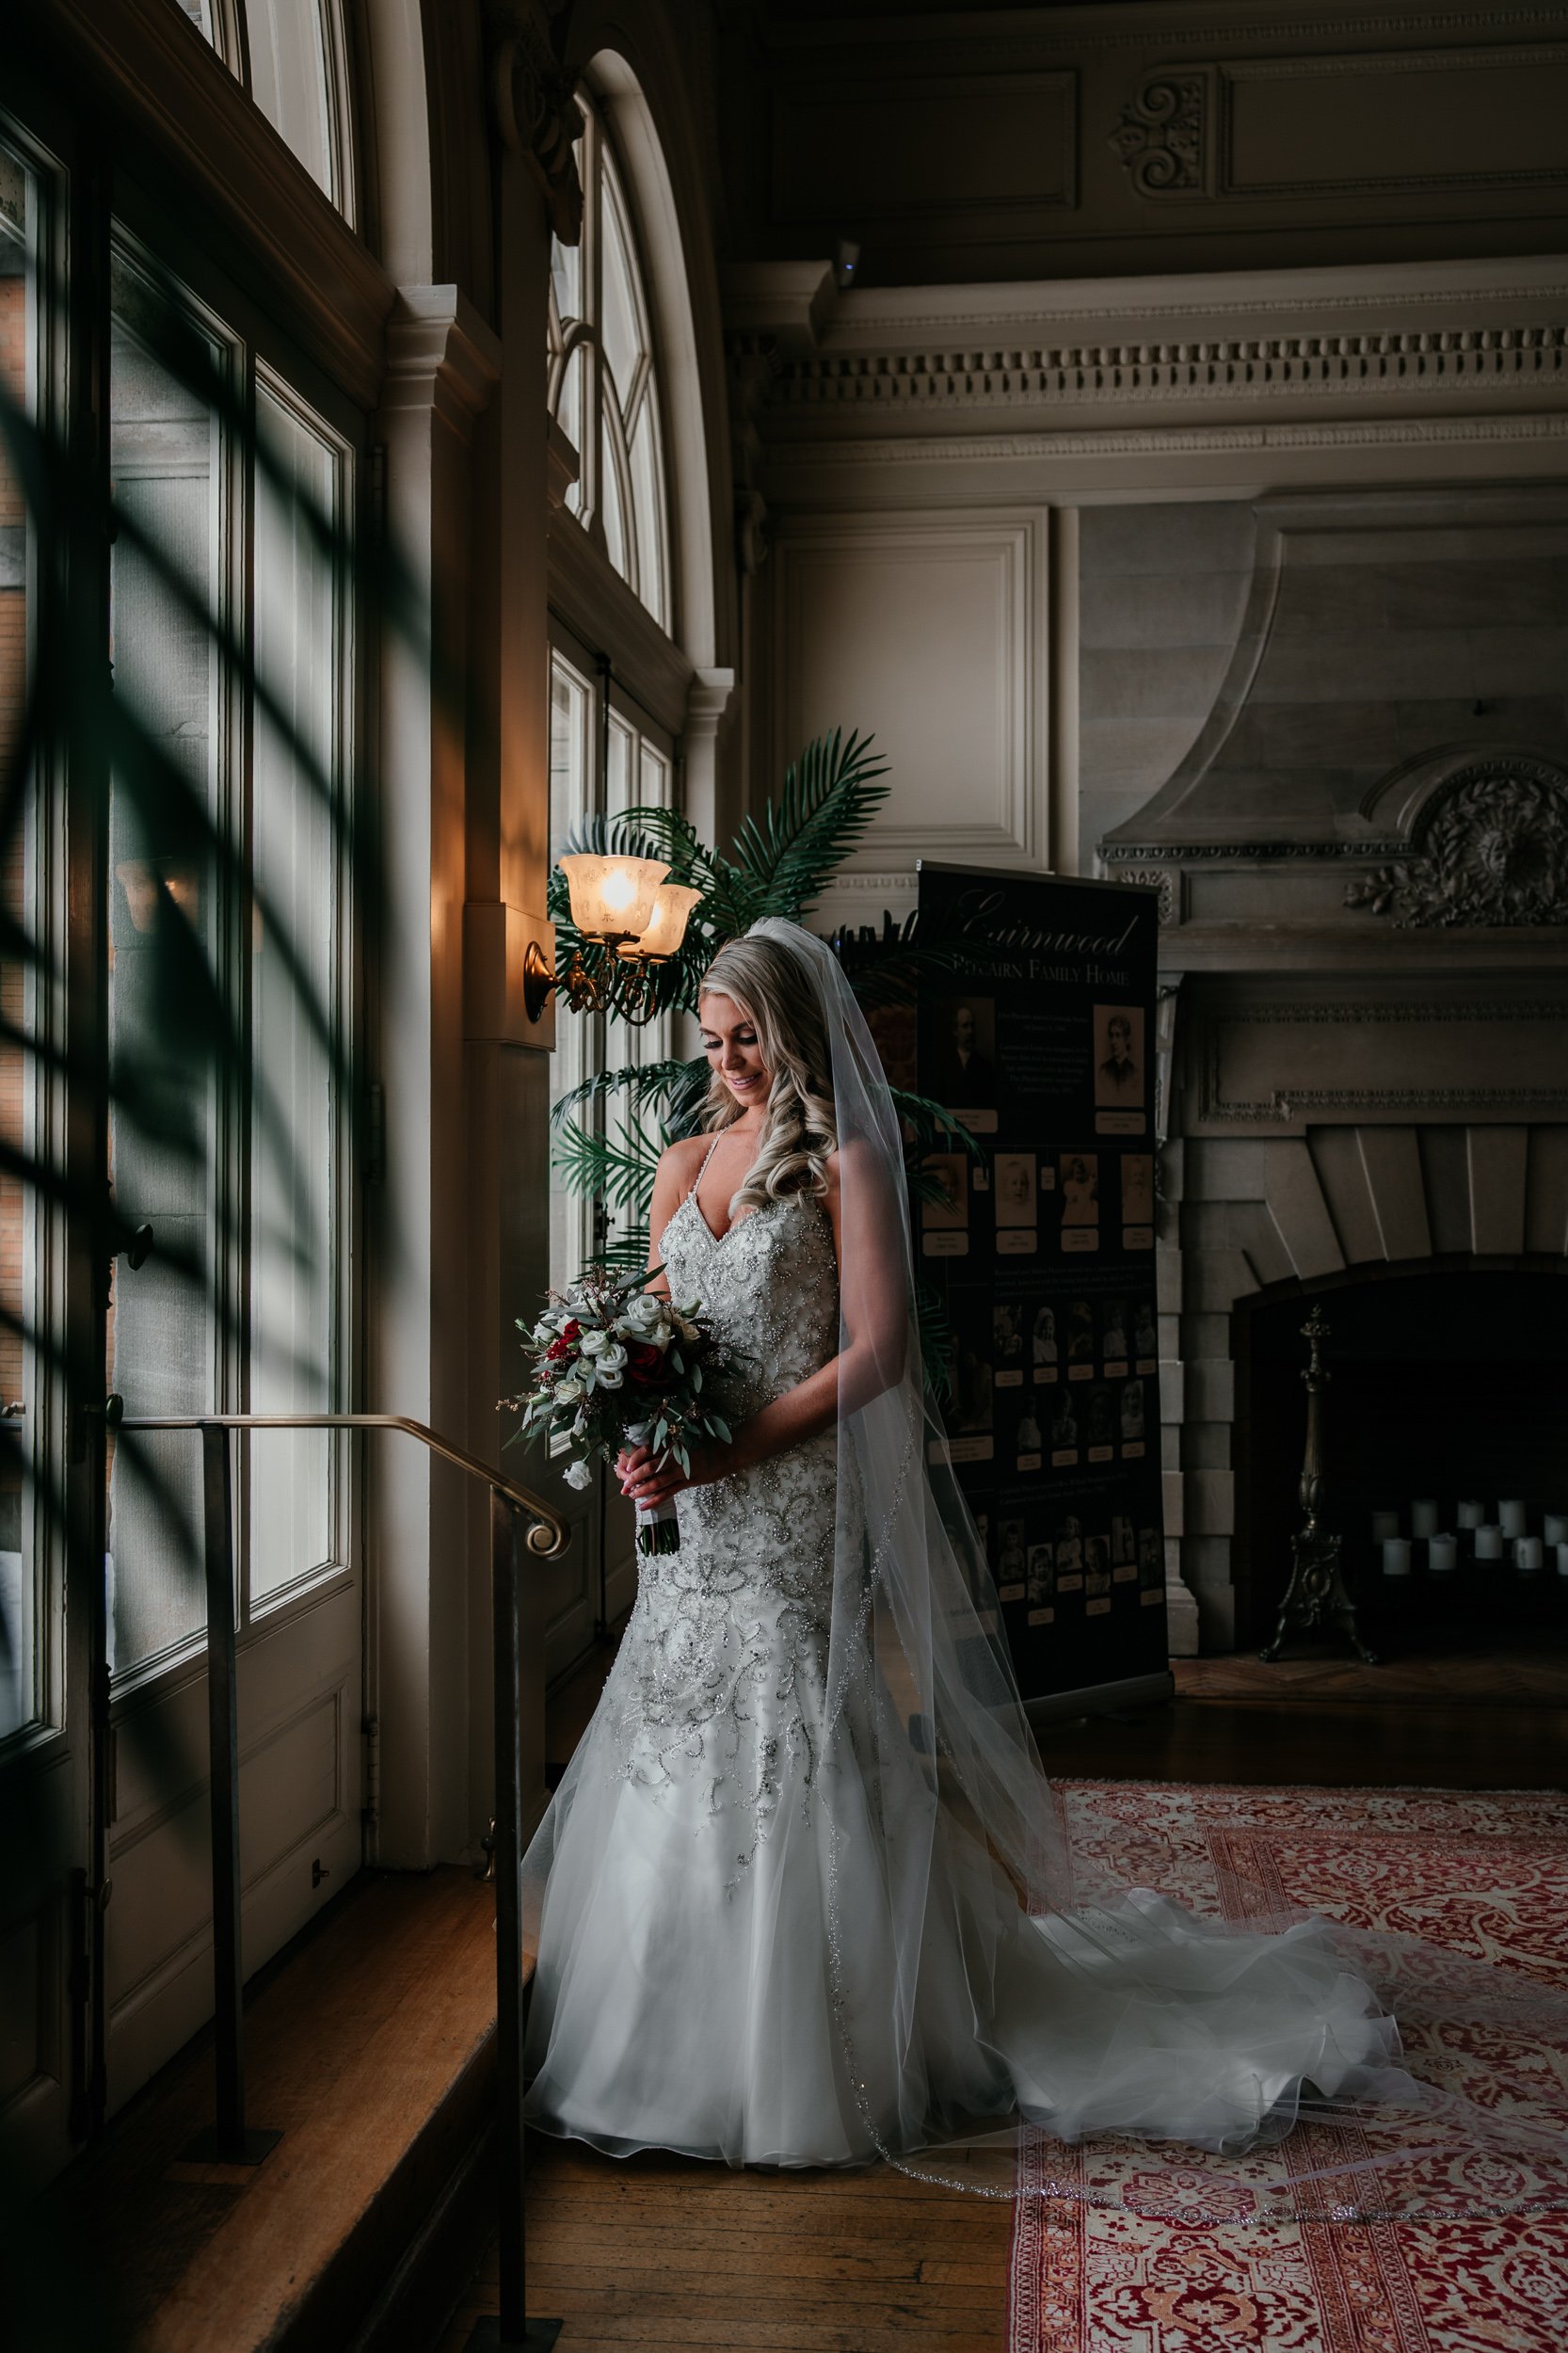 LUCEINS MANOR WEDDING PHOTOGRAPHY - FEB 2021 - 30.jpg